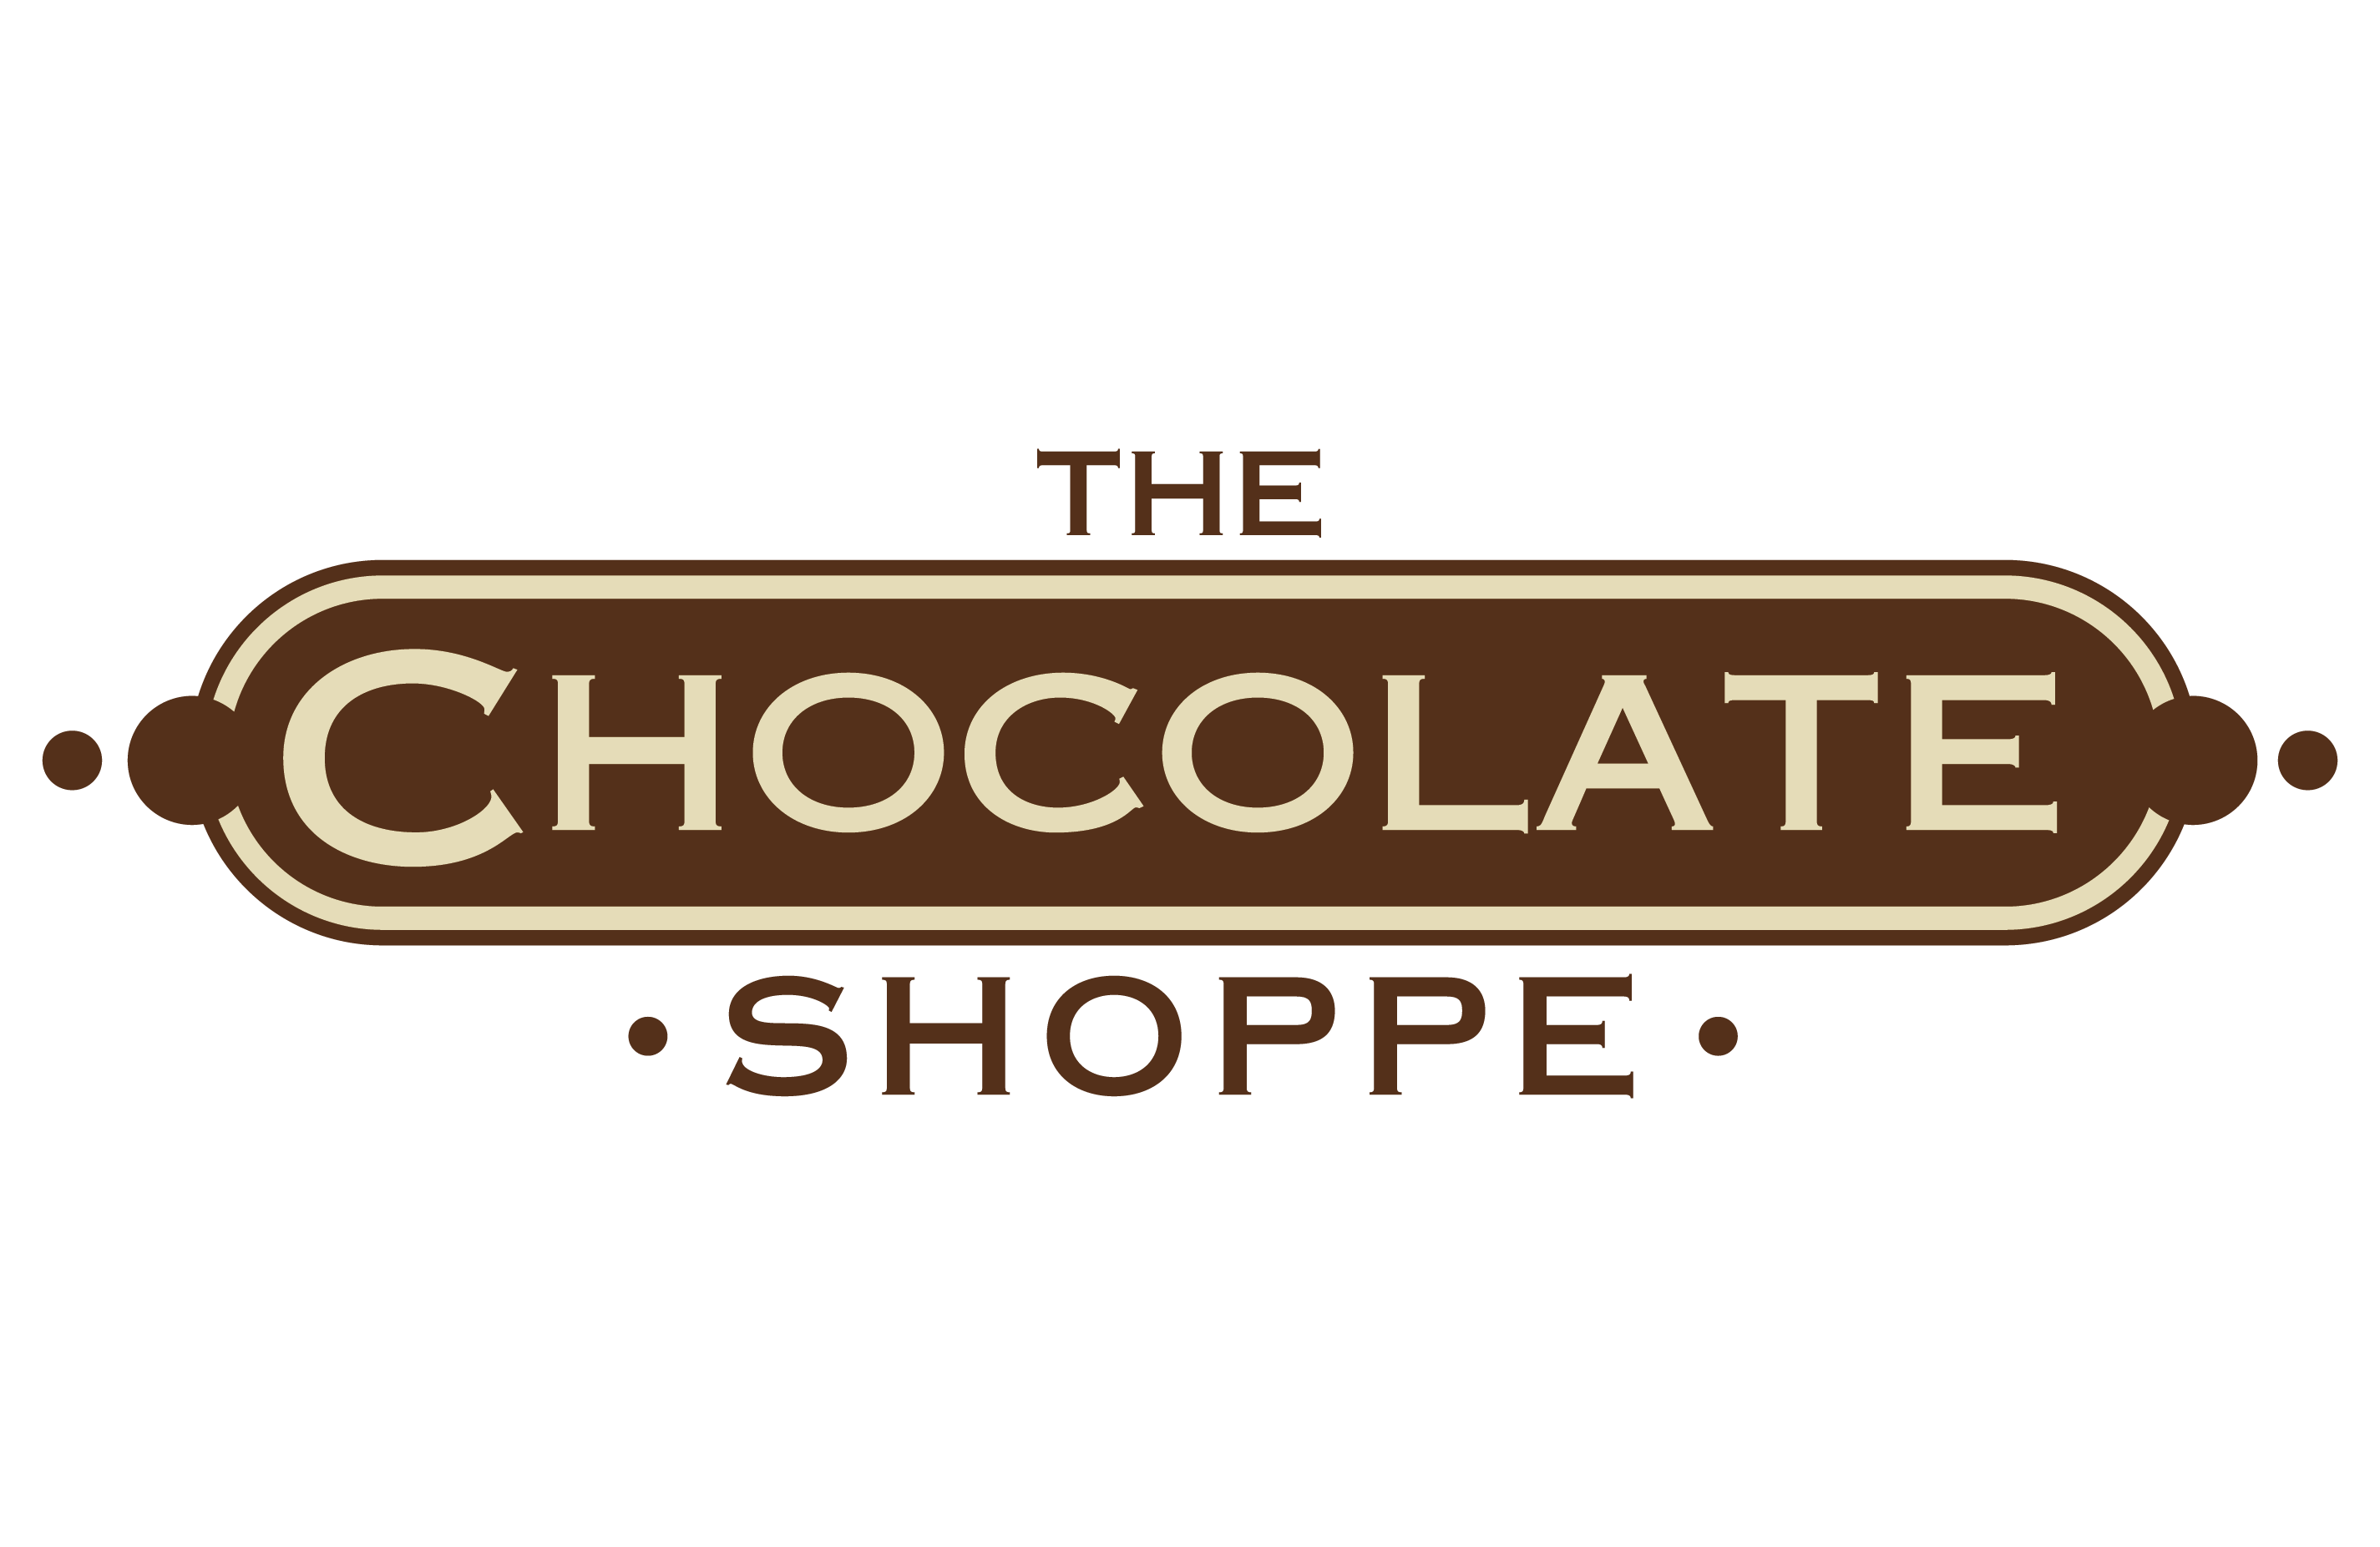 The Chocolate Shoppe